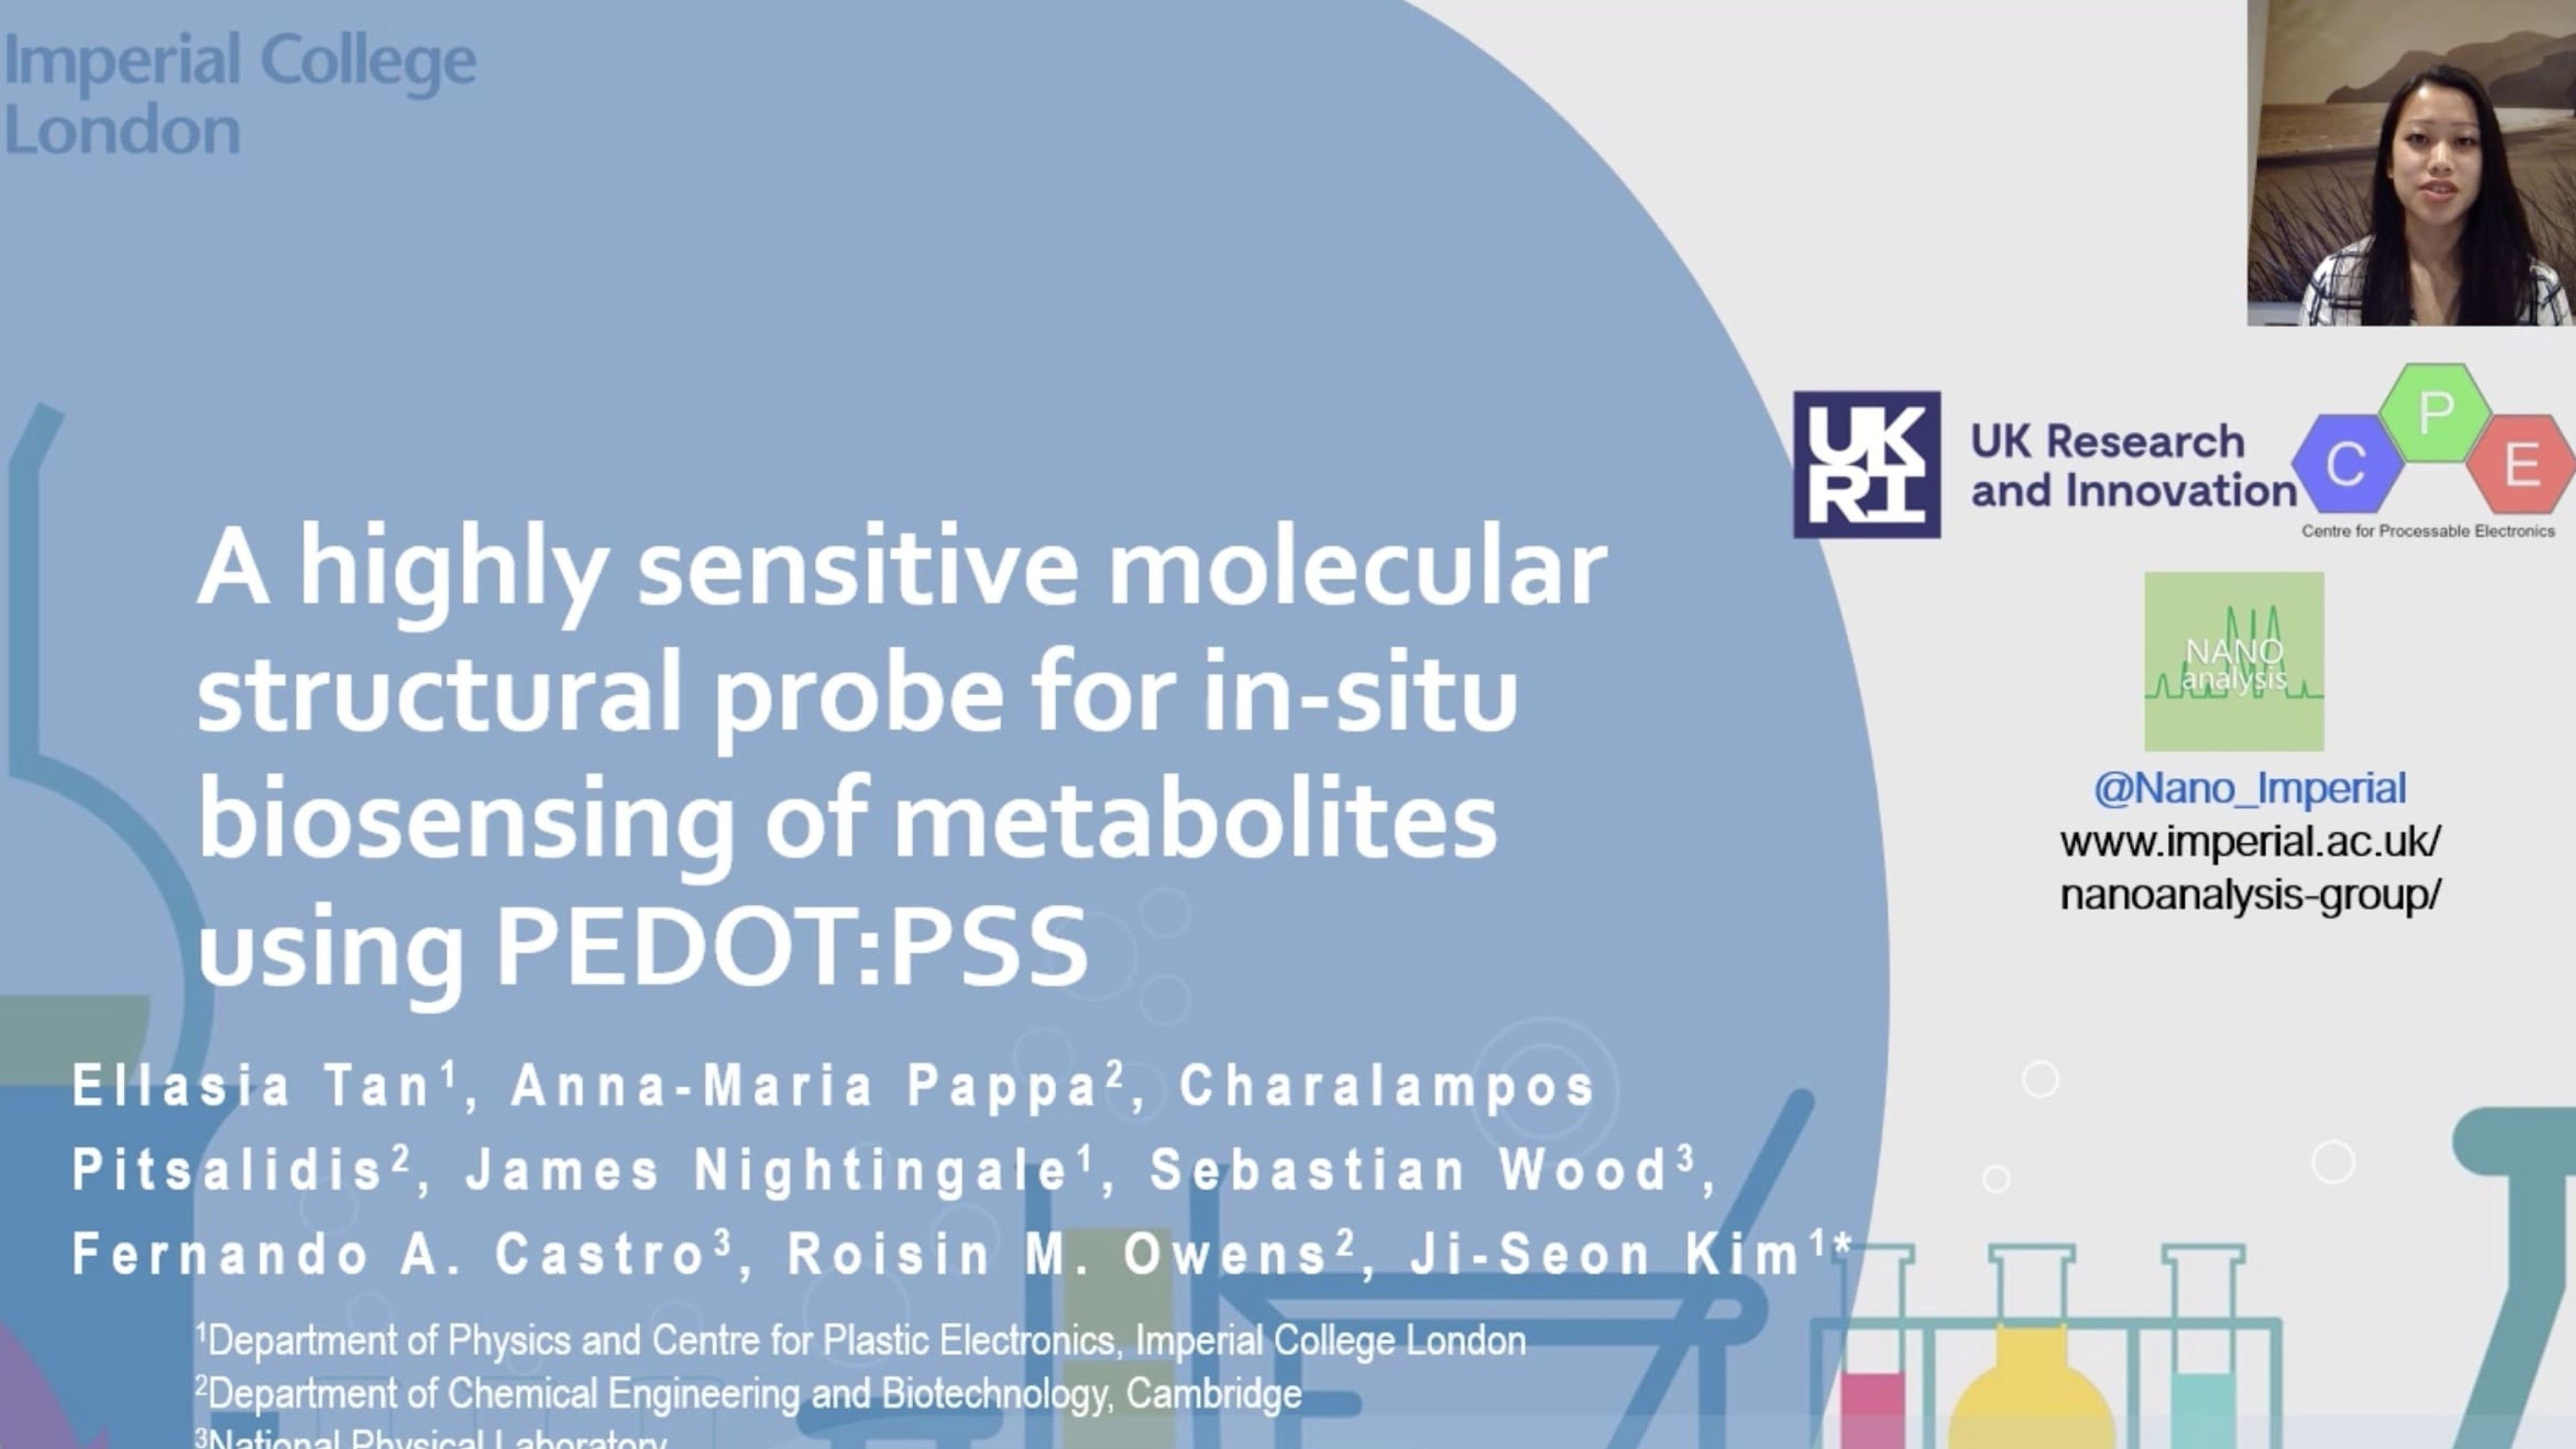 In-situ biosensing of metabolites with PEDOT:PSS probe